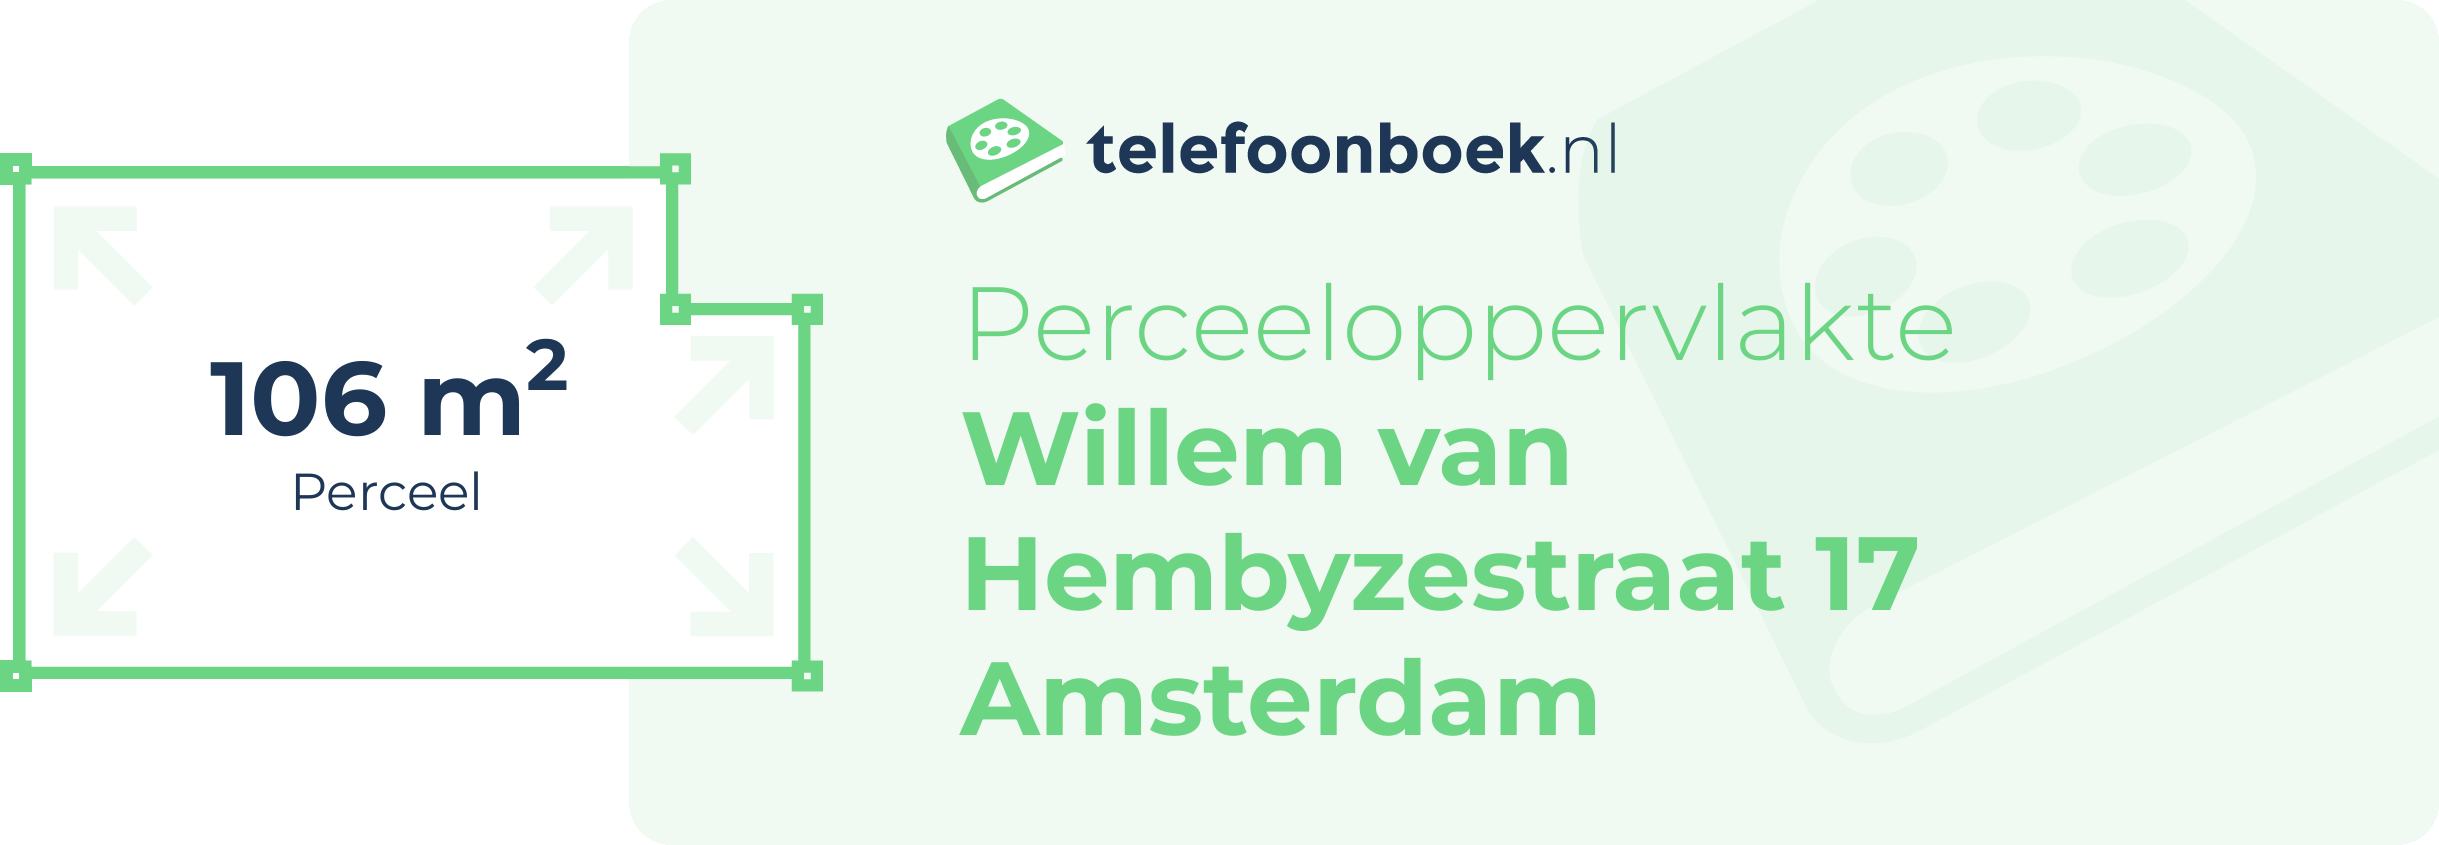 Perceeloppervlakte Willem Van Hembyzestraat 17 Amsterdam